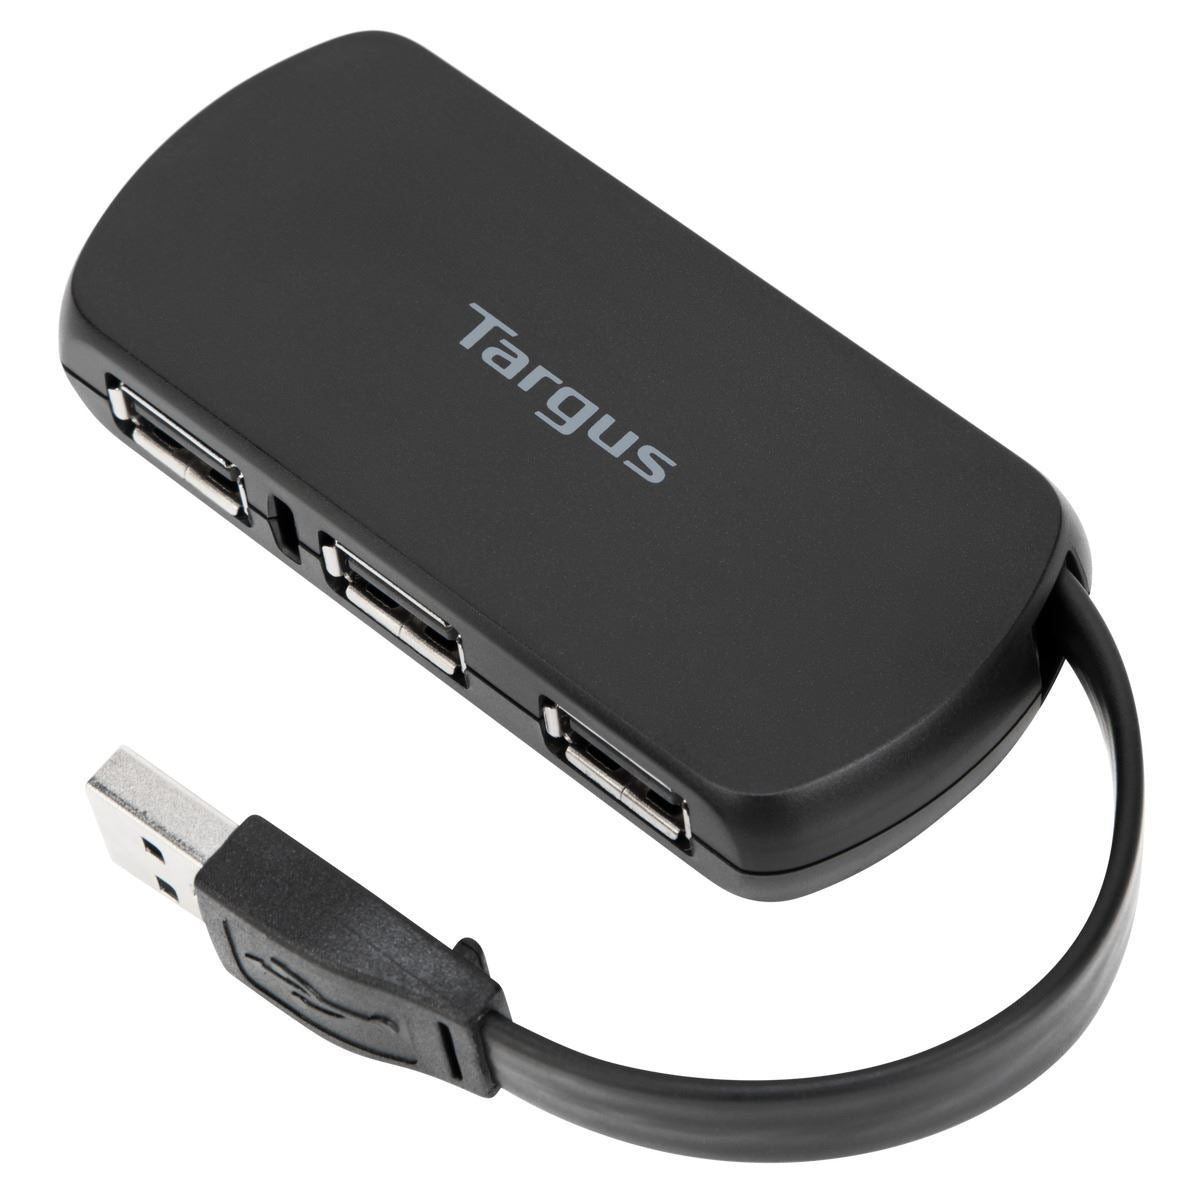 Targus 4 Port USB Hub Black | Laptop Accessories | Halabh.com